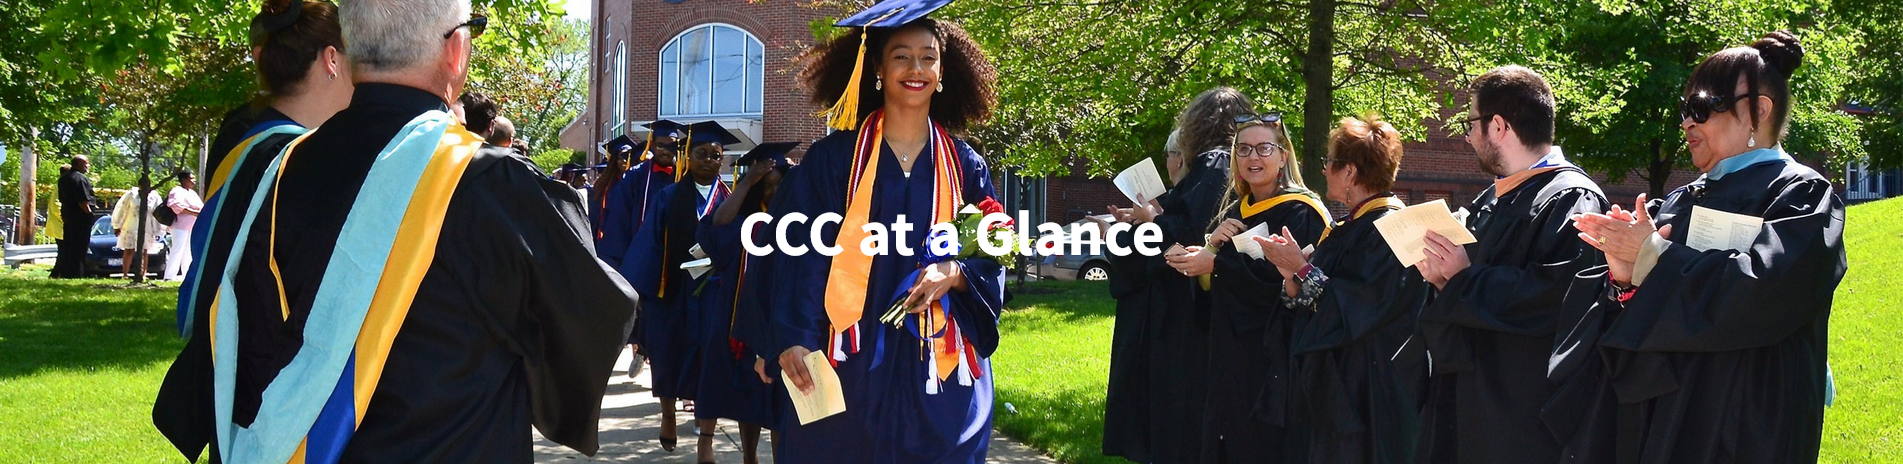 CCC at a Glance Logo